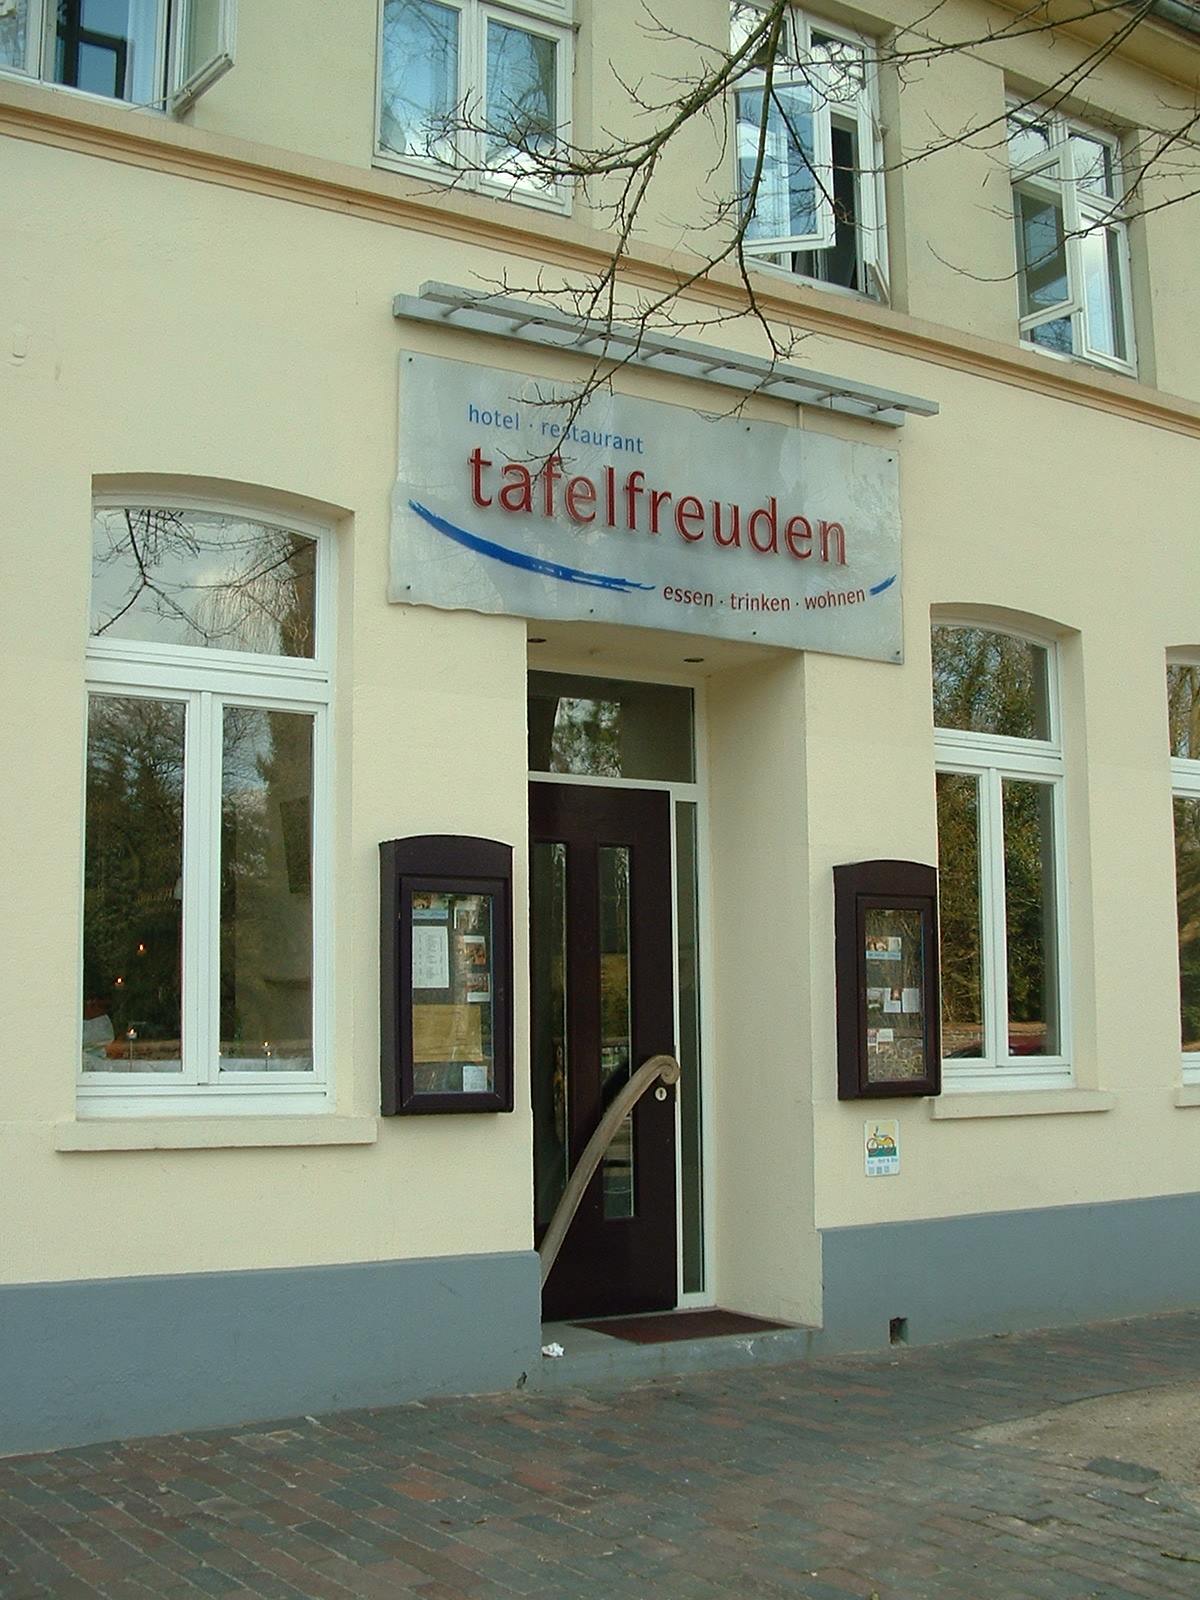 Tafelfreuden - Oldenburg